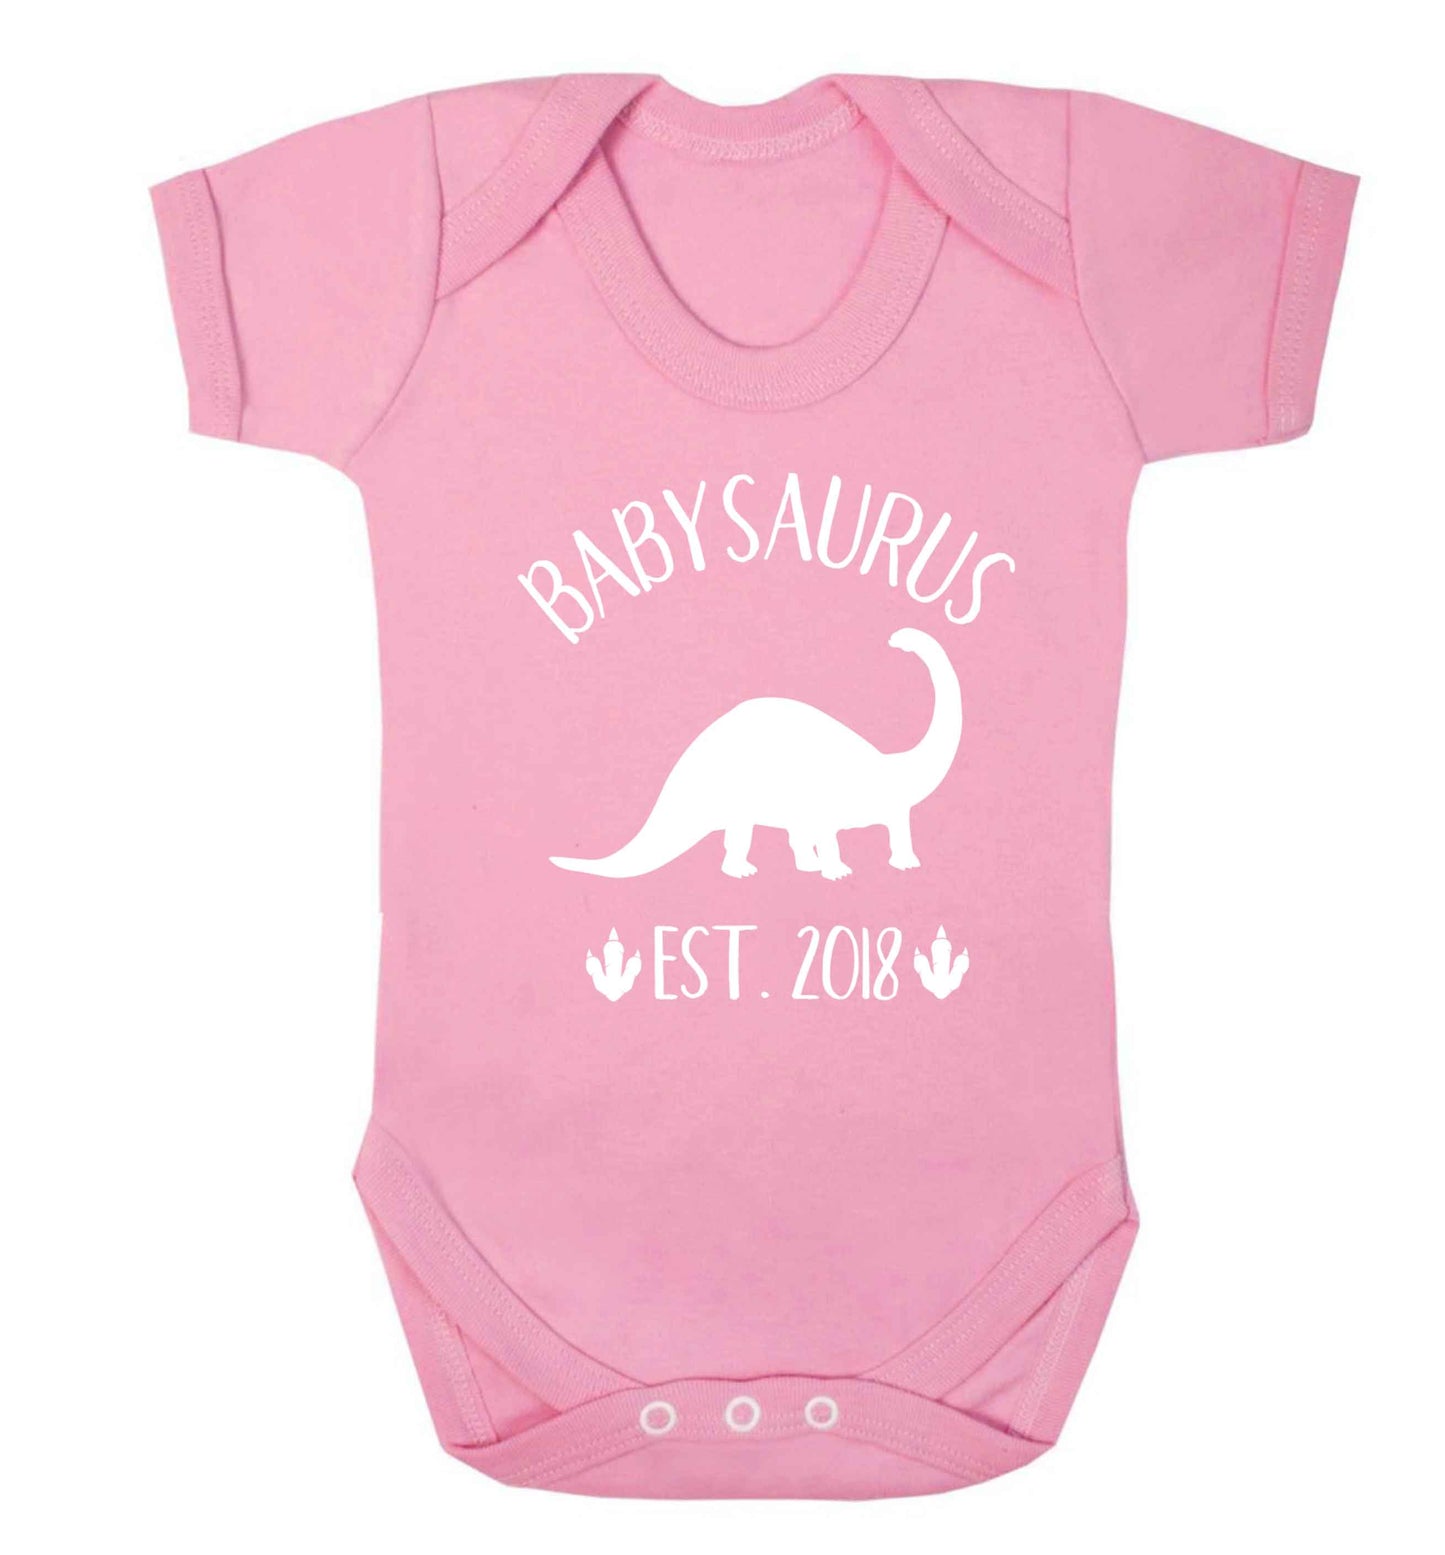 Personalised babysaurus since (custom date) Baby Vest pale pink 18-24 months